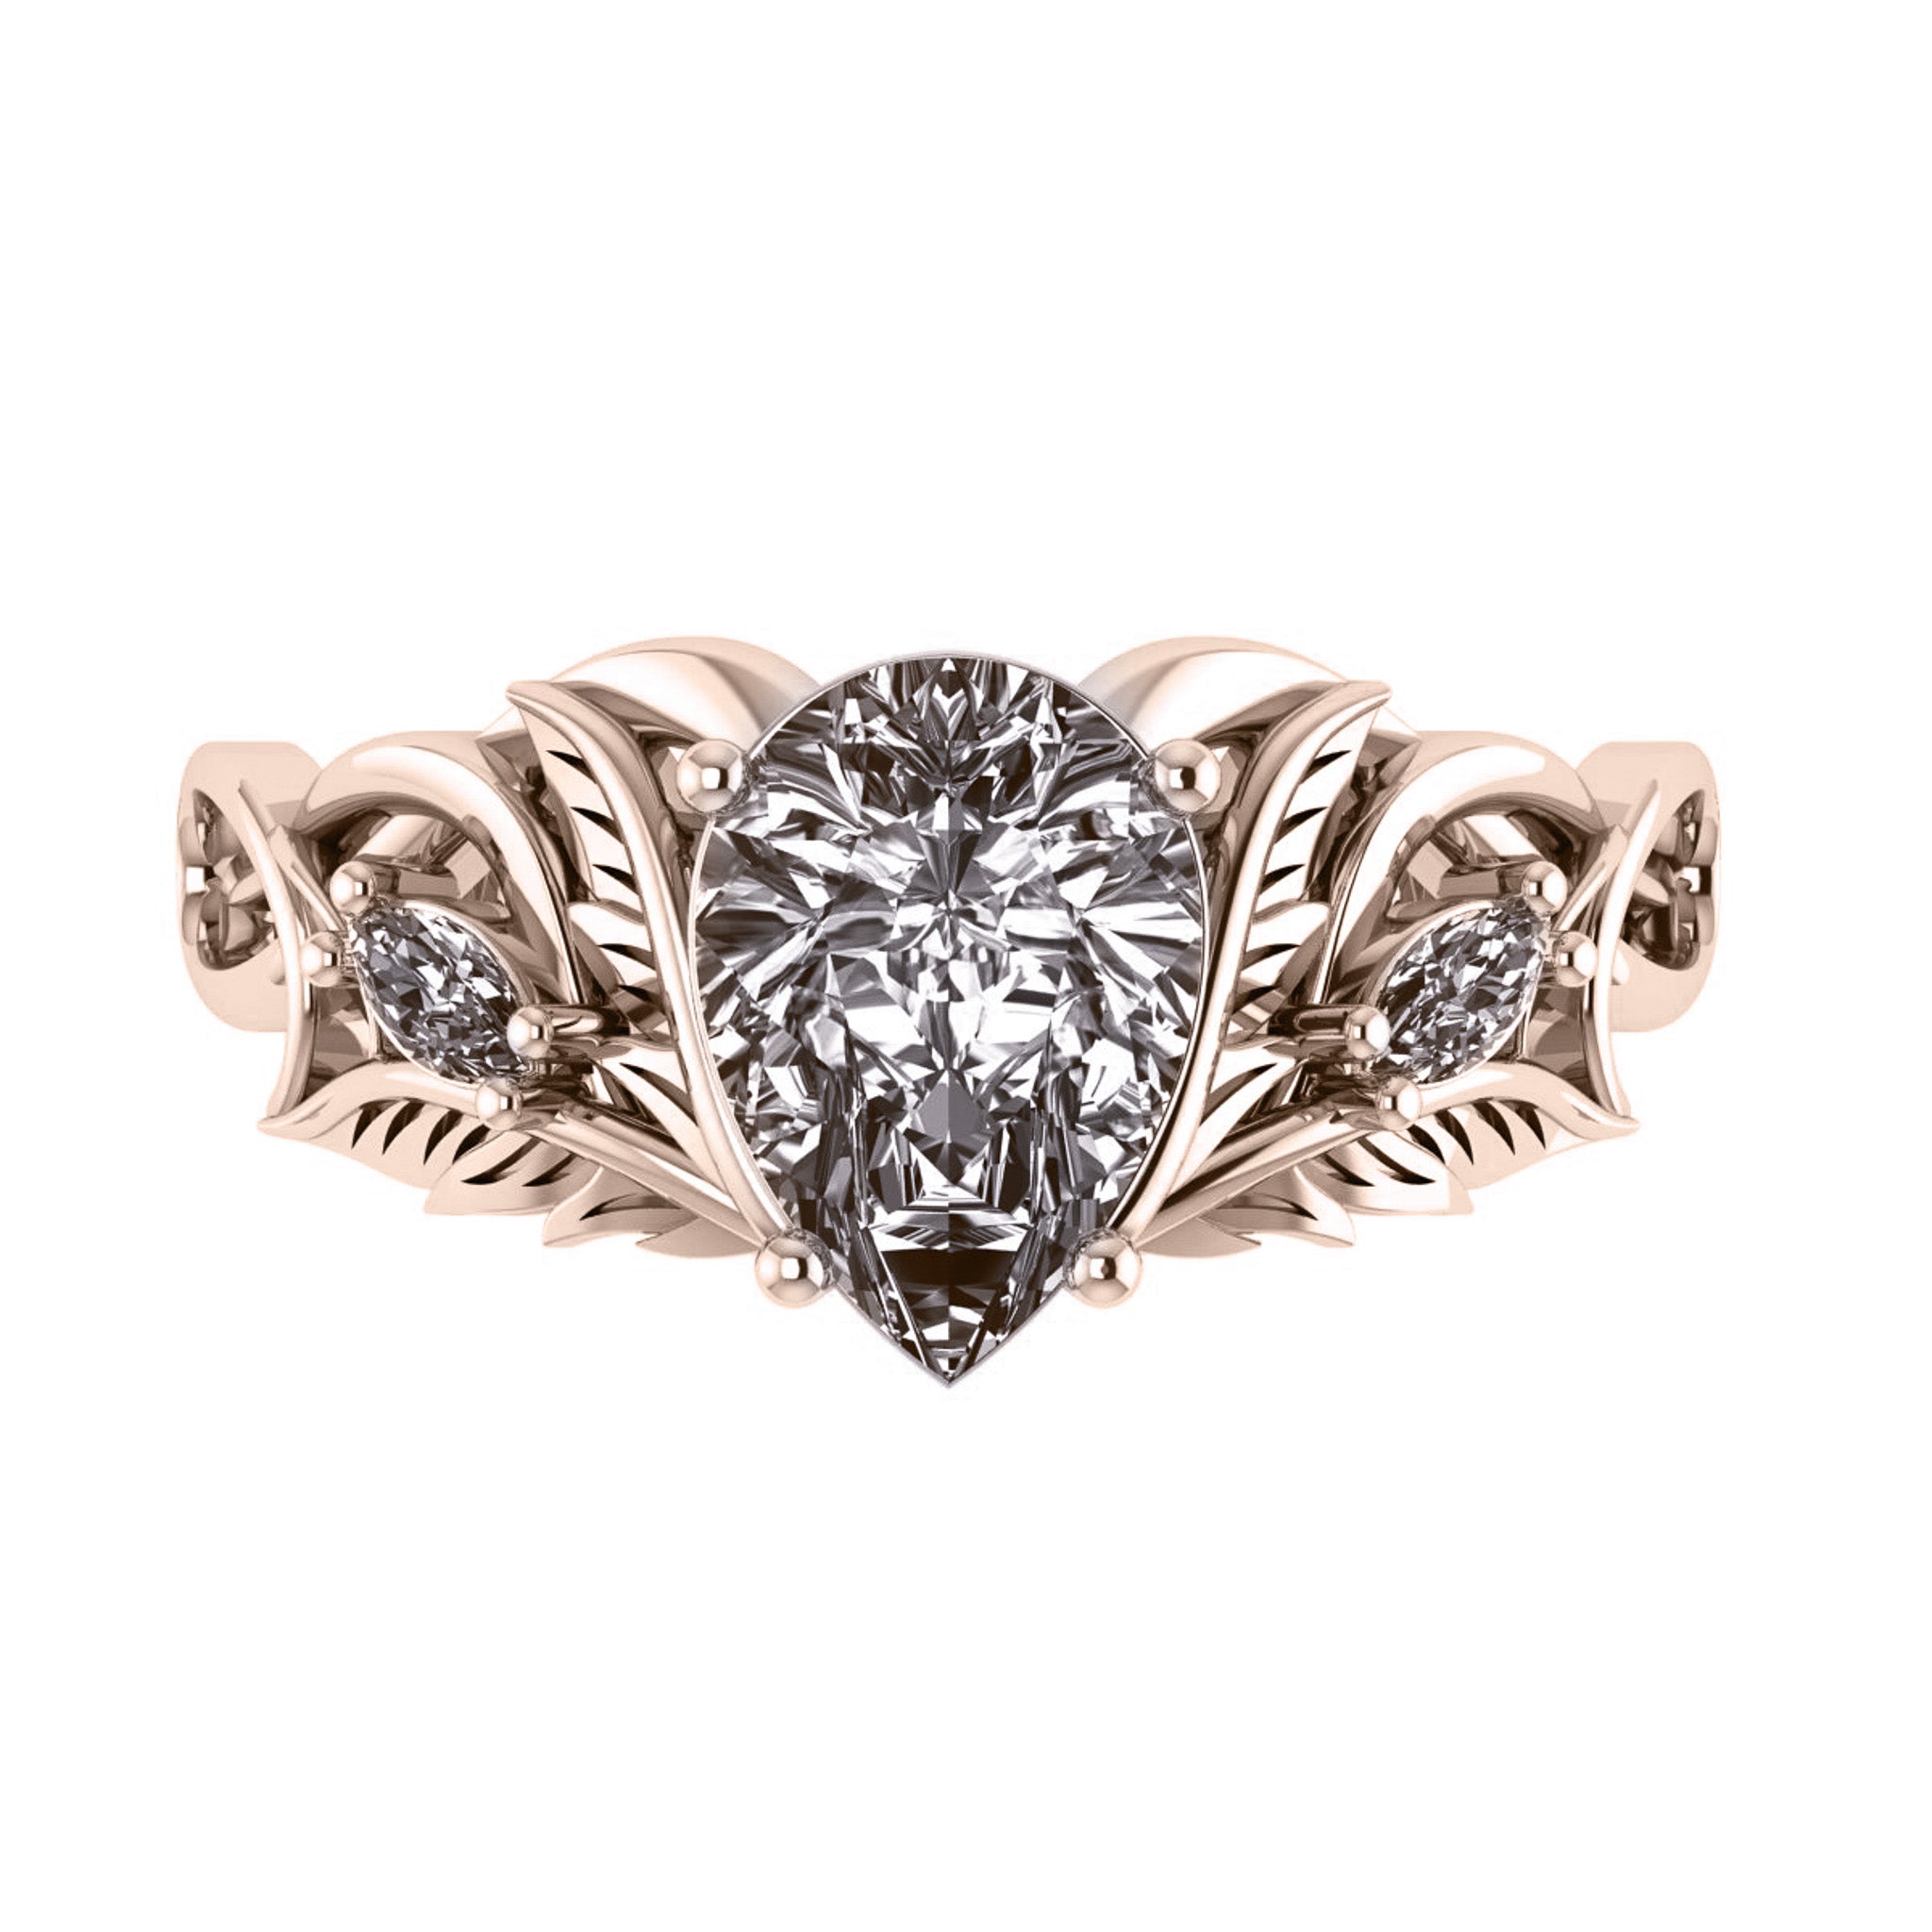 18K Art Deco Filigree Engagement Setting White Gold Ring, Size 6.25 |  Property Room